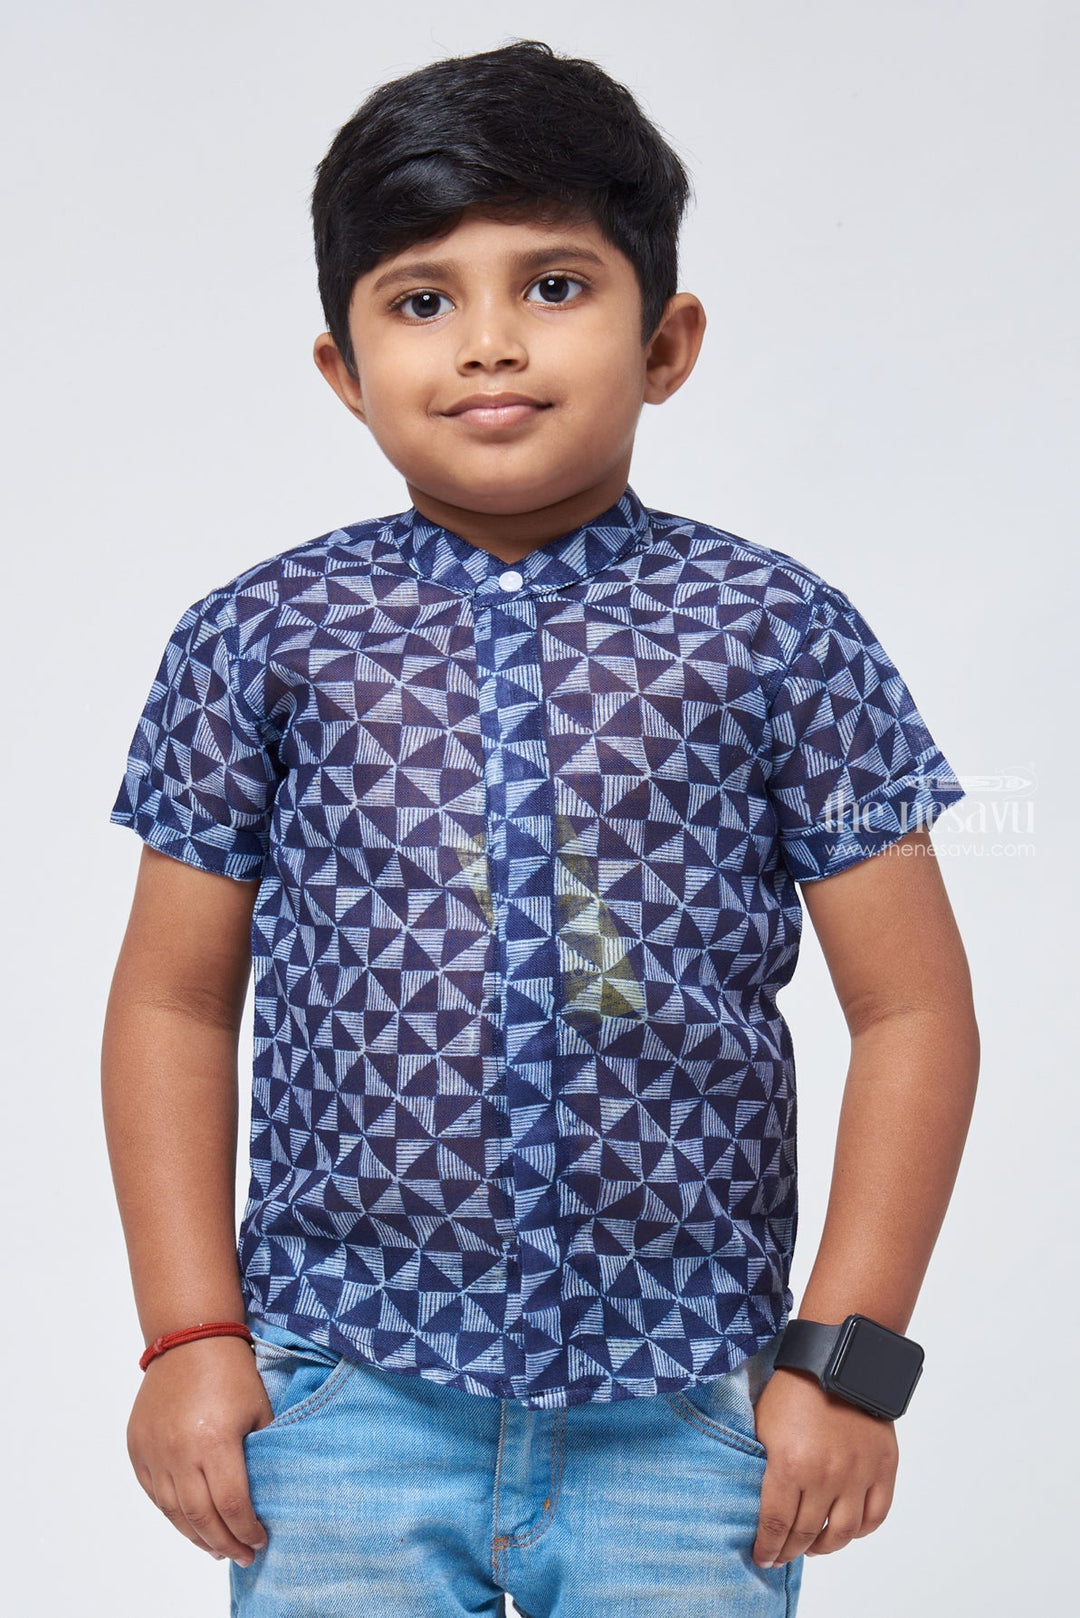 The Nesavu Boys Linen Shirt Indigo Serenity: Linen Boys' Shirt with Tranquil Blue Prints for a Calming Look Nesavu 14 (6M) / Blue / Linen BS052-14 Tranquil Blue Printed Shirt | Baby Shirt Online | The Nesavu